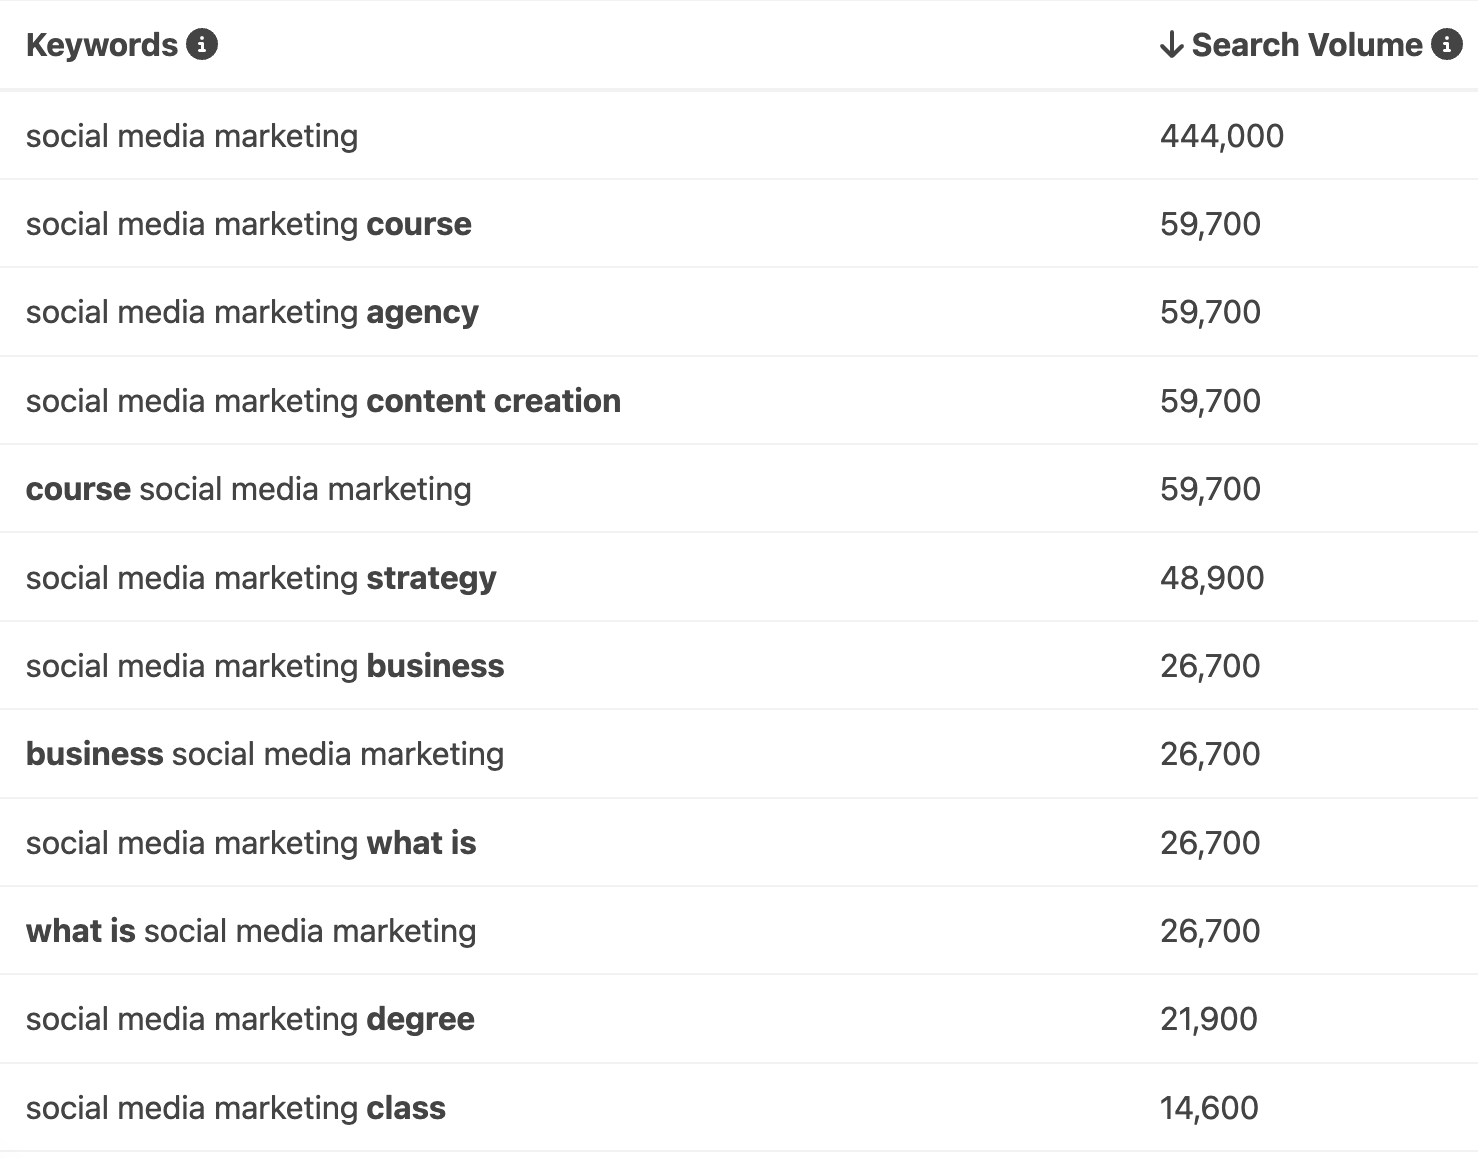 social media marketing YouTube keywords